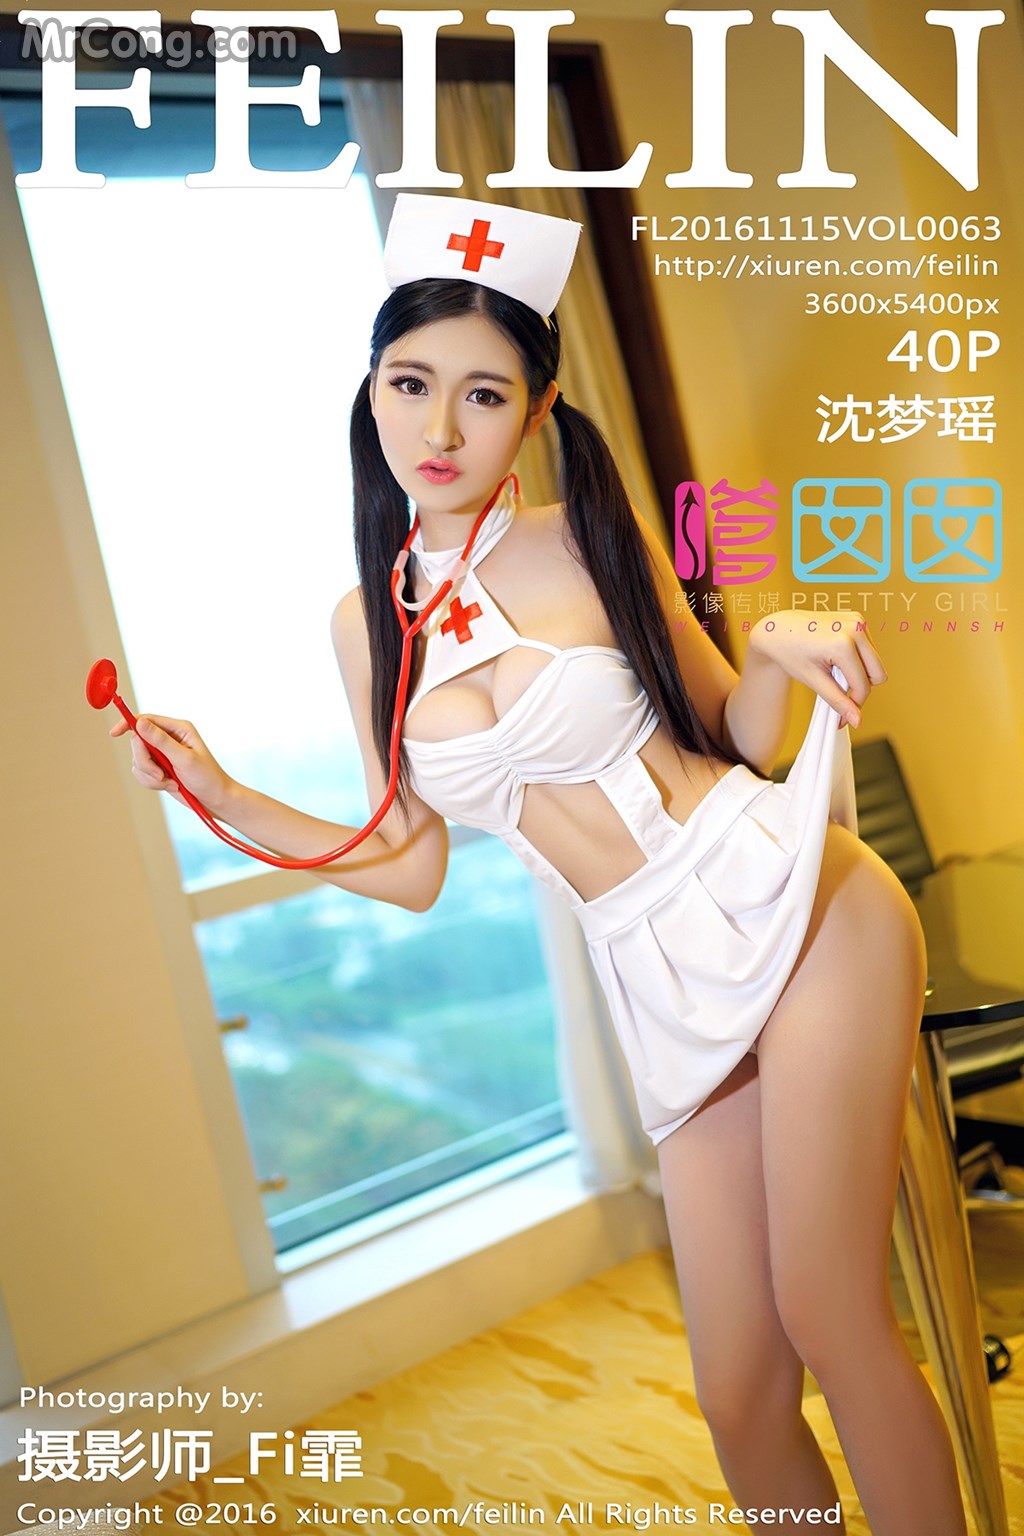 FEILIN Vol.063: Model Shen Mengyao (沈 梦瑶) (41 photos) photo 1-0